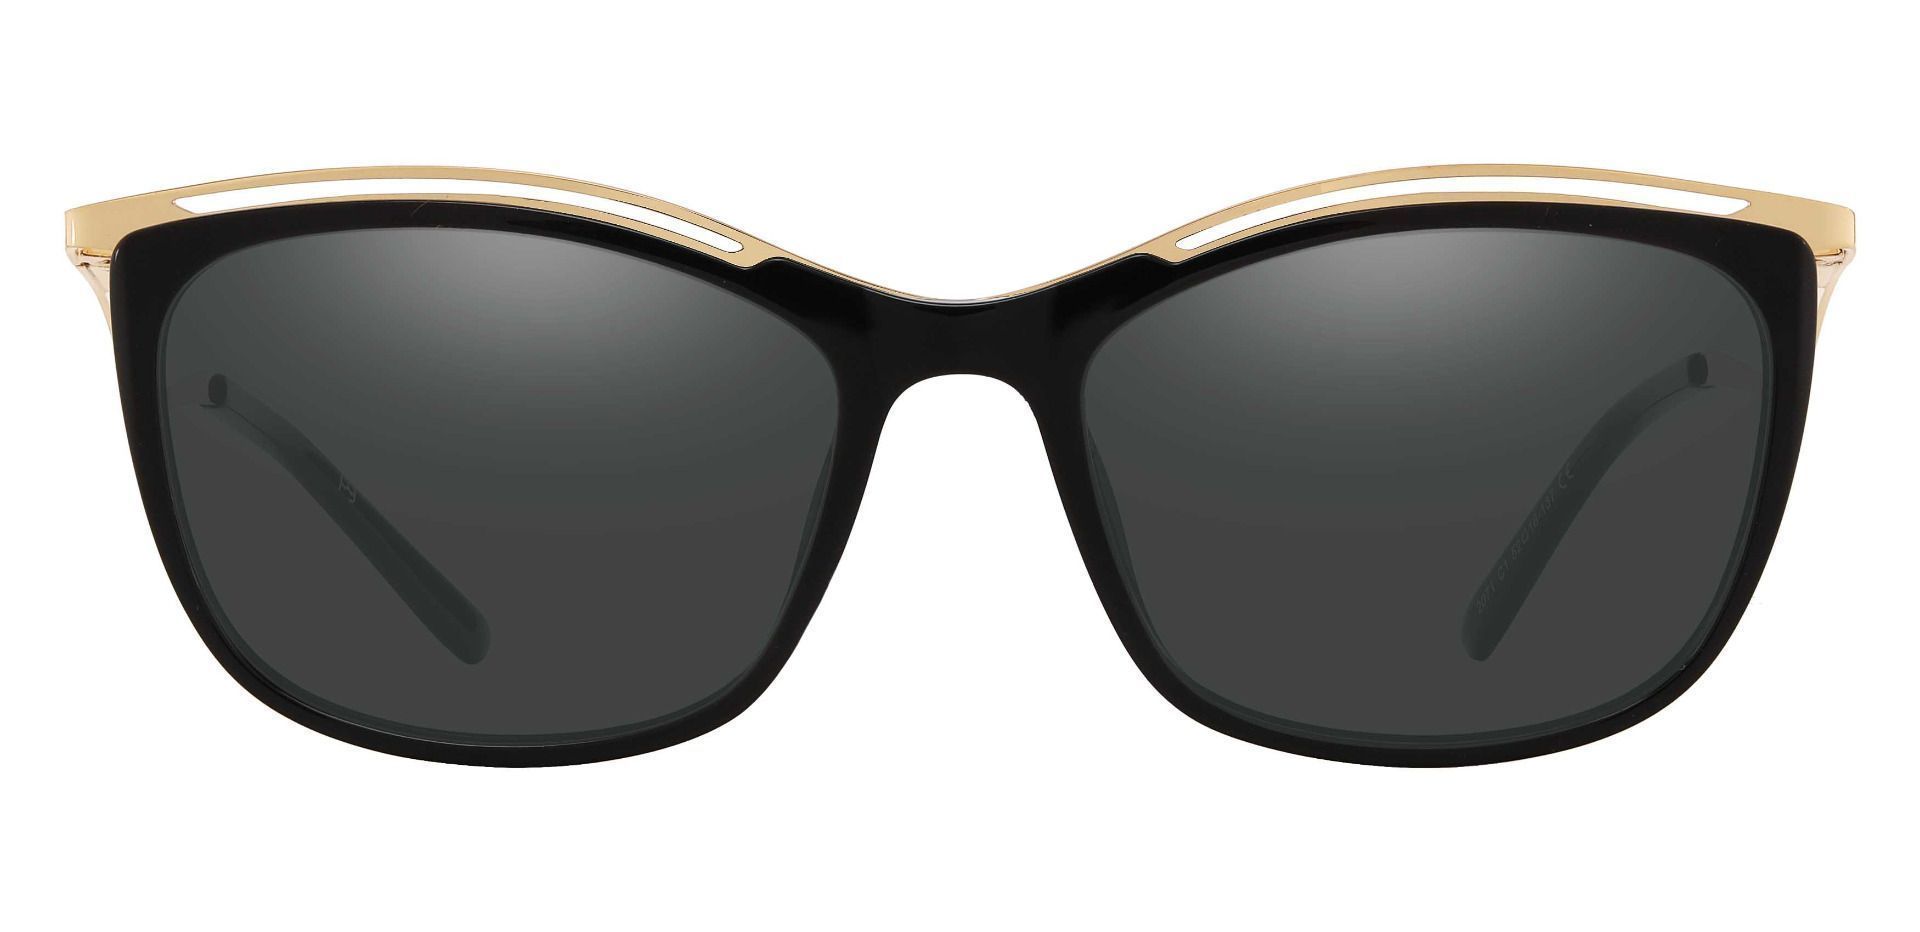 Enola Cat Eye Progressive Sunglasses - Black Frame With Gray Lenses